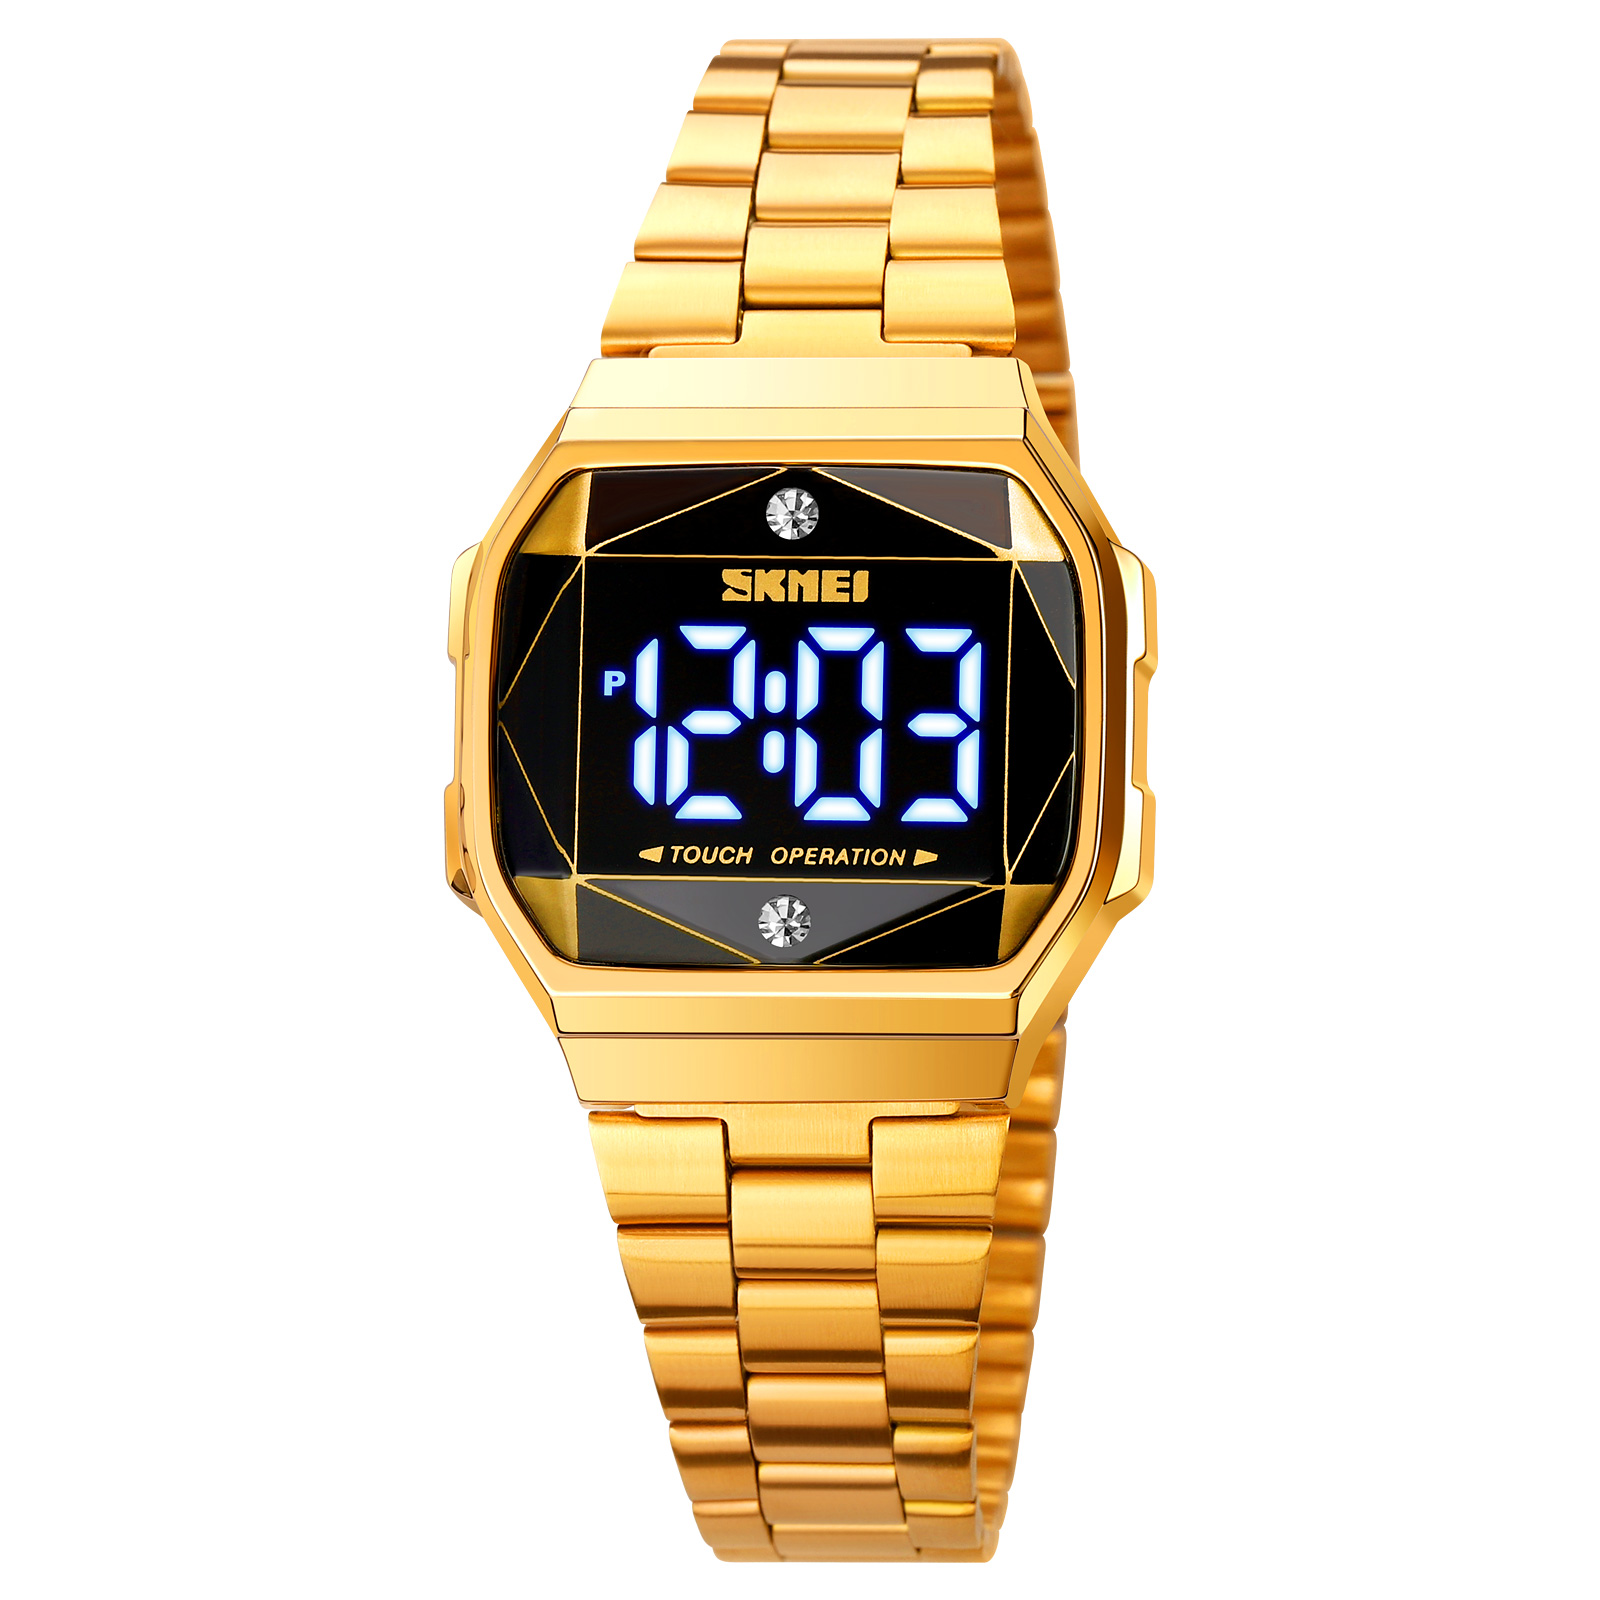 LED watch-Skmei Watch Manufacture Co.,Ltd